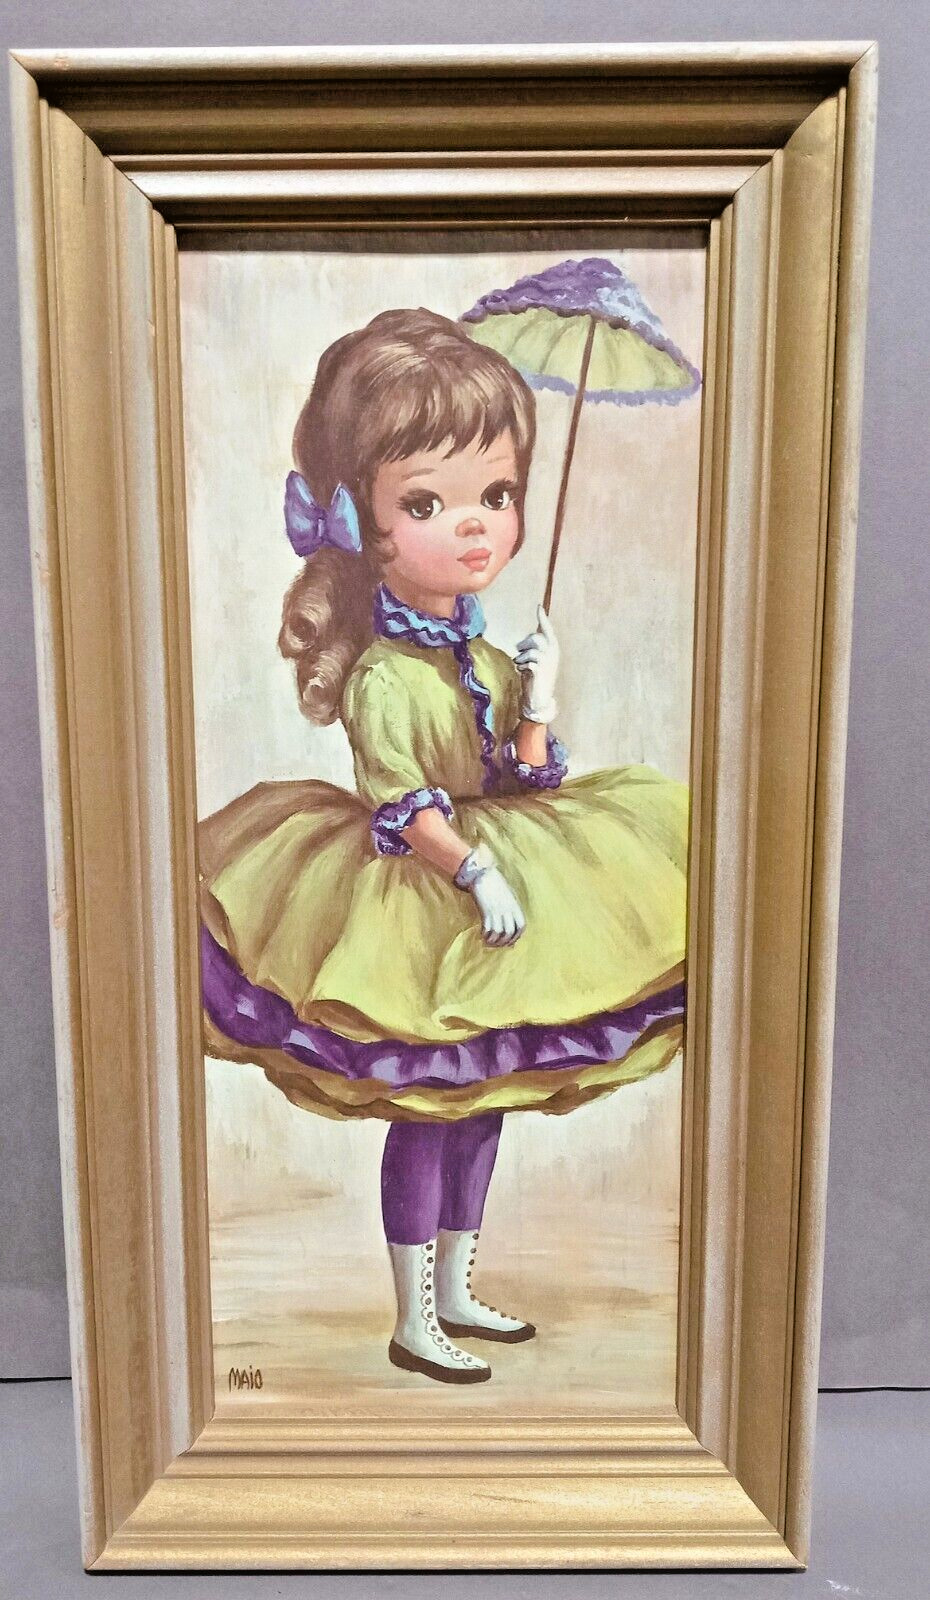 Vintage 1960s Maio High Button Shoes Big Eye Girl Litho Print Framed Wall Art